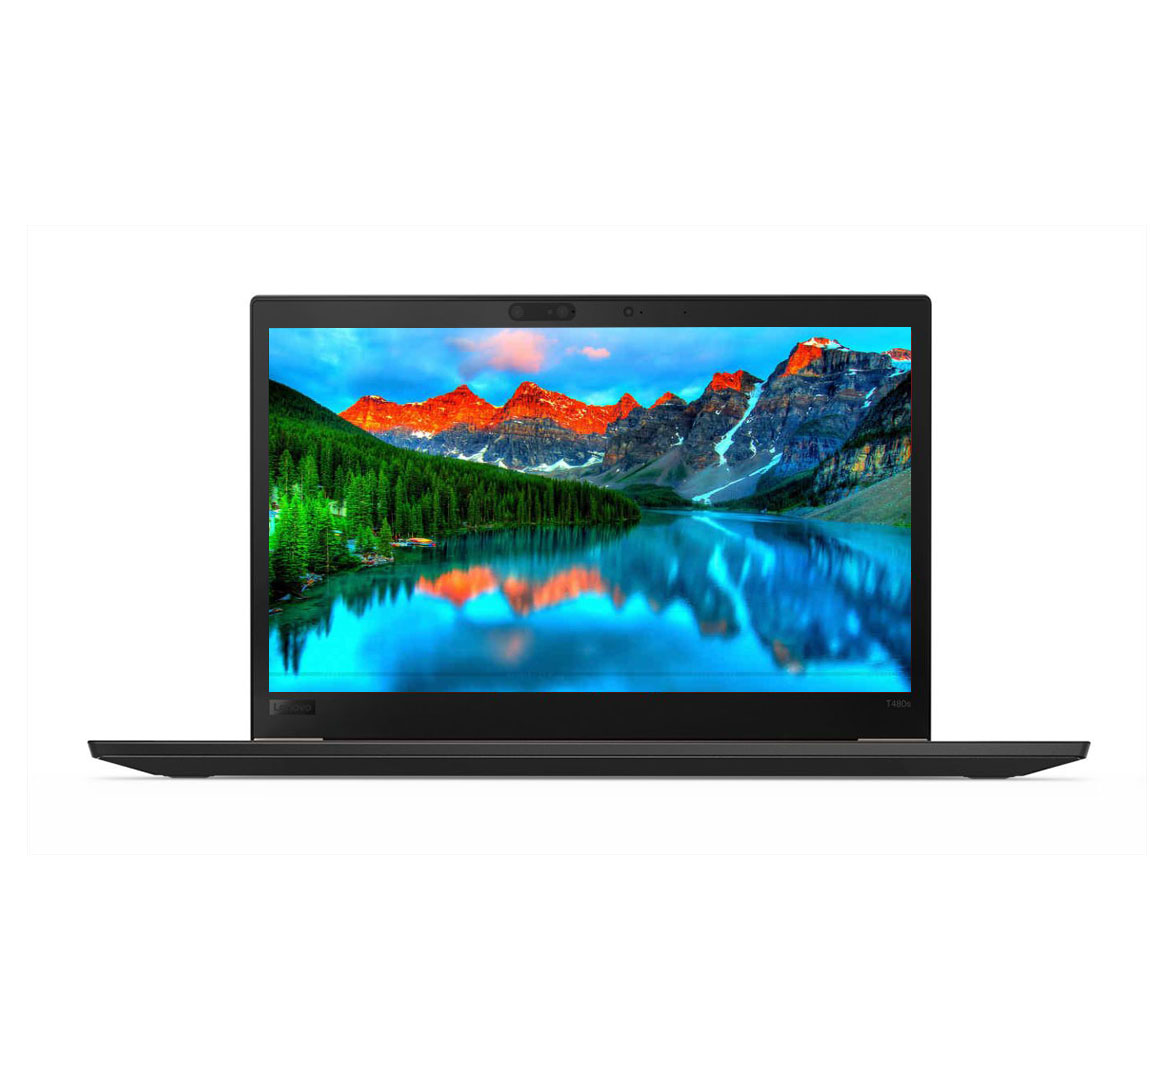 Lenovo ThinkPad T480s Business Laptop, Intel Core i5-8th Generation CPU, 16GB RAM, 512GB SSD, 14 inch Touchscreen Display, Windows 10 Pro